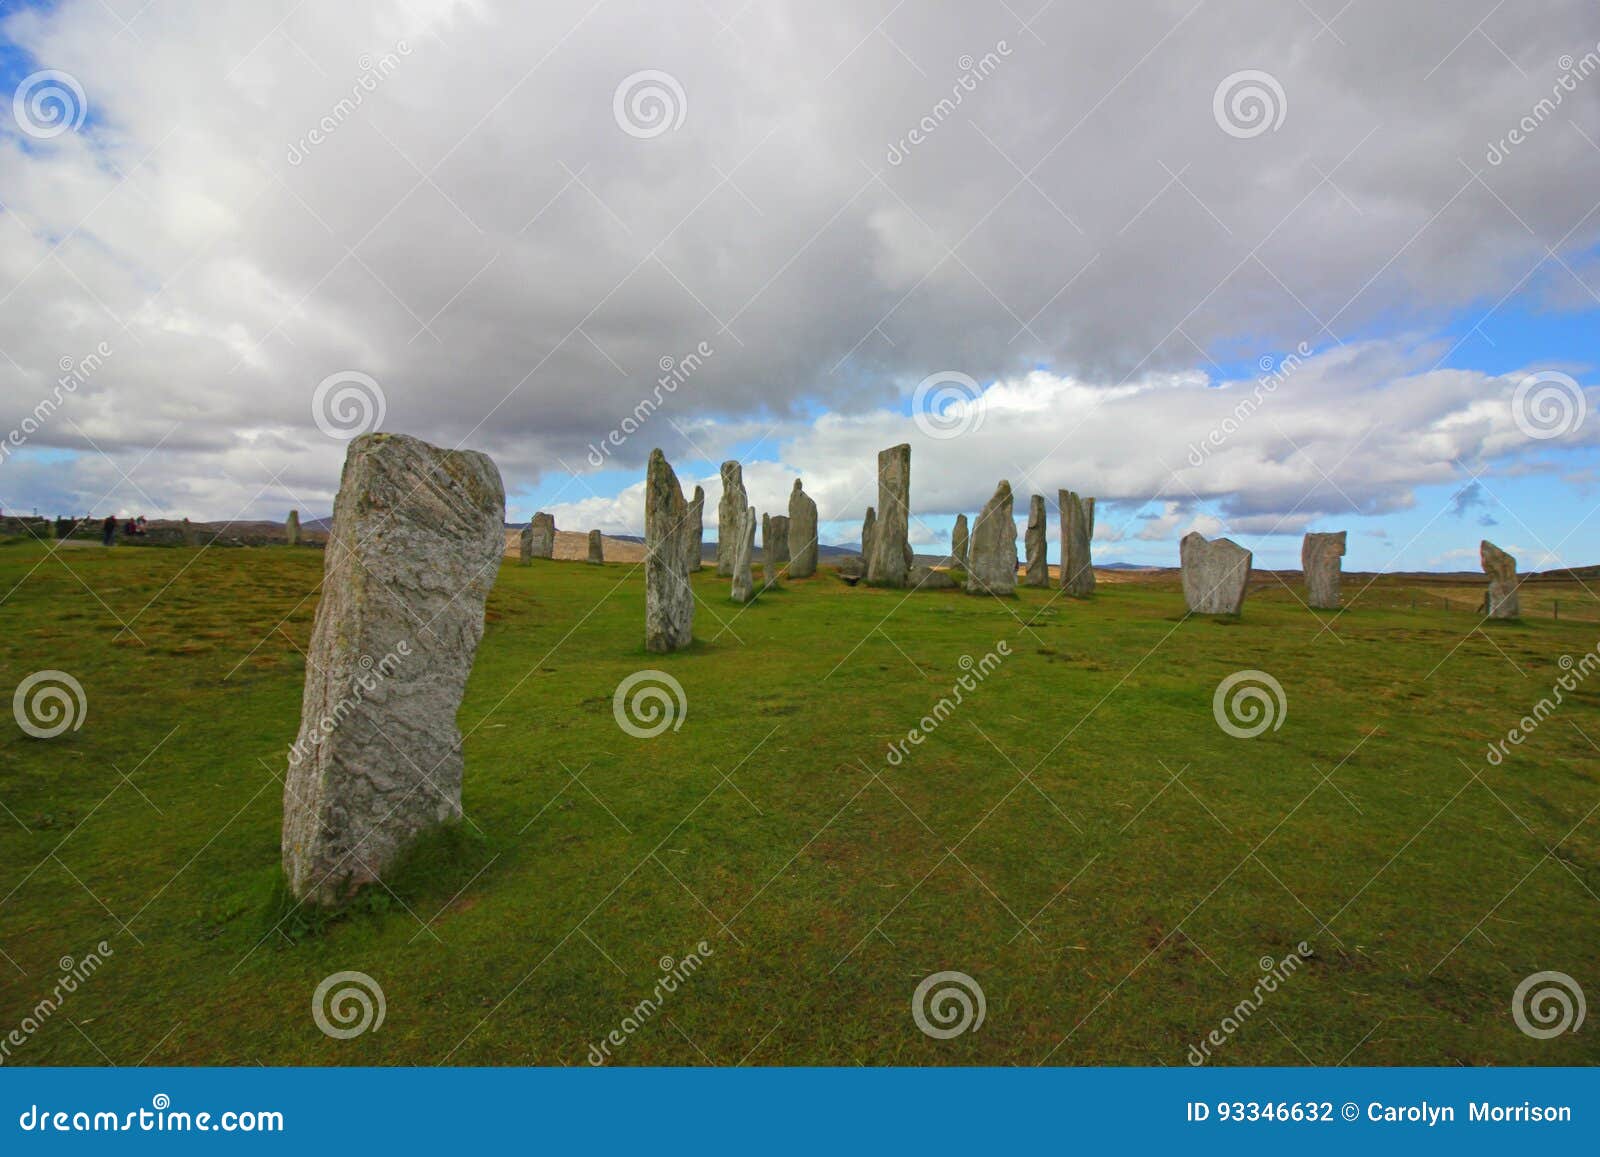 callanish standing stones, isle of lewis, scotland